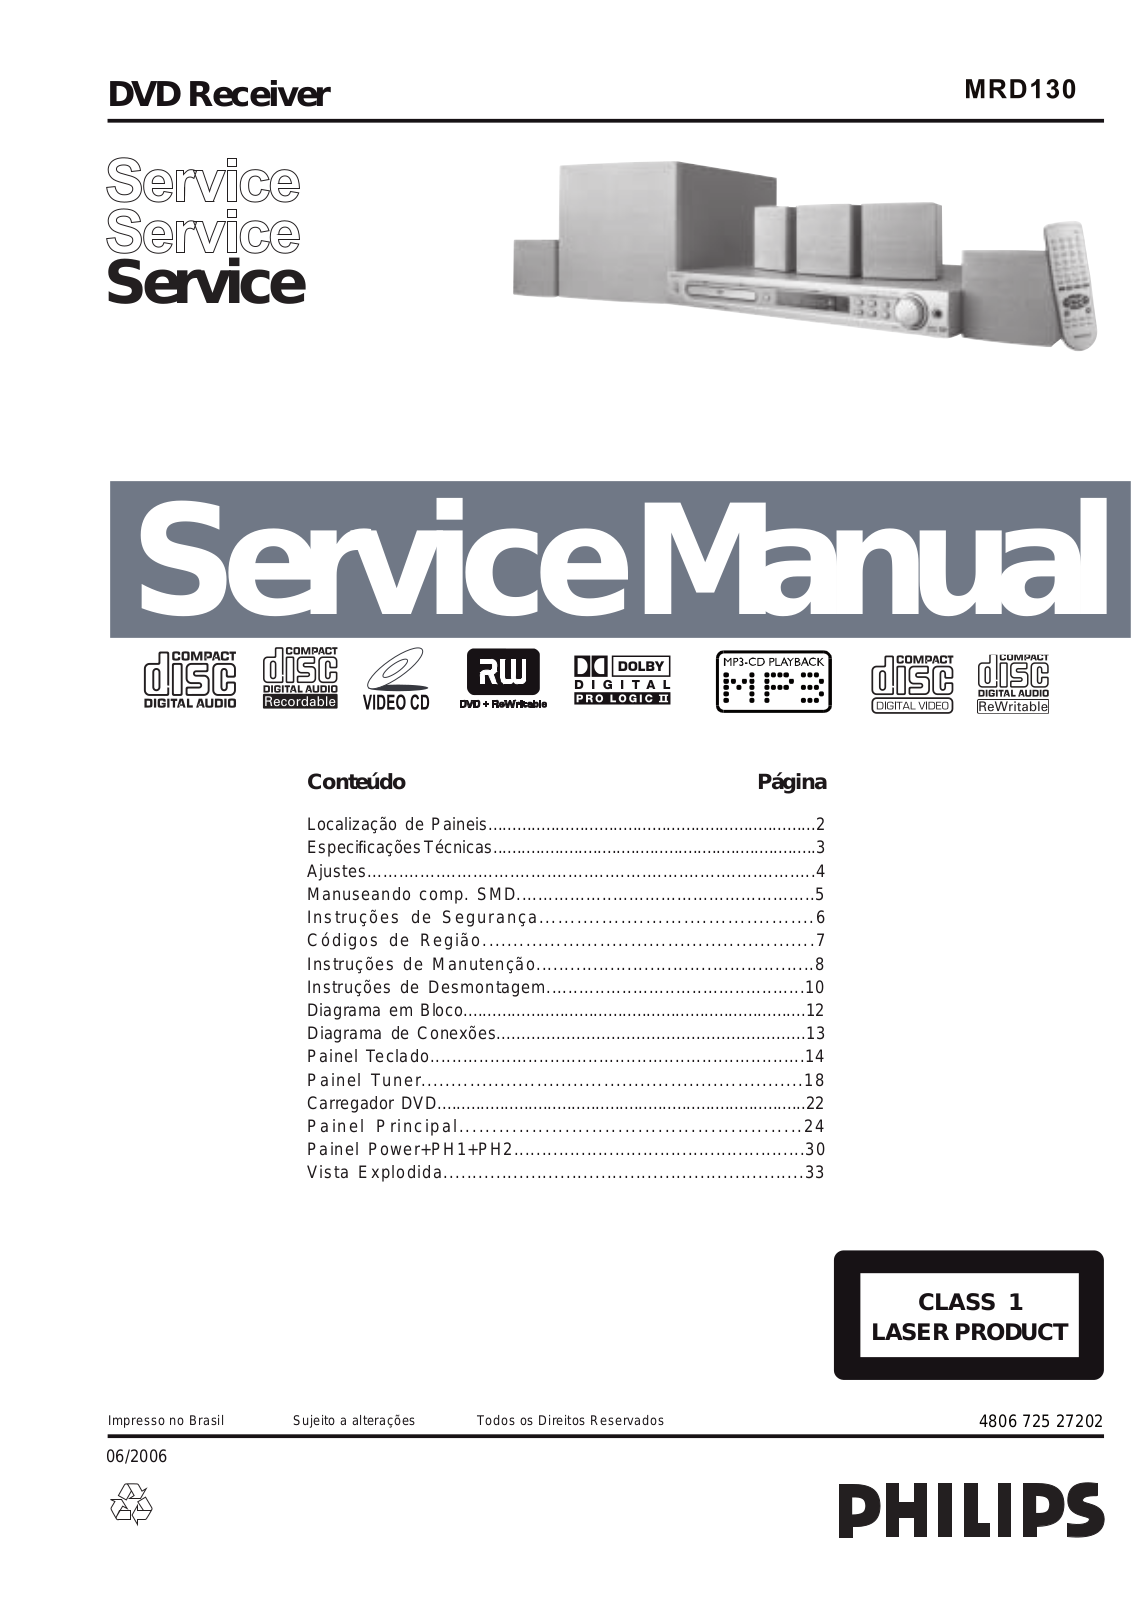 Philips MRD-130 Service Manual